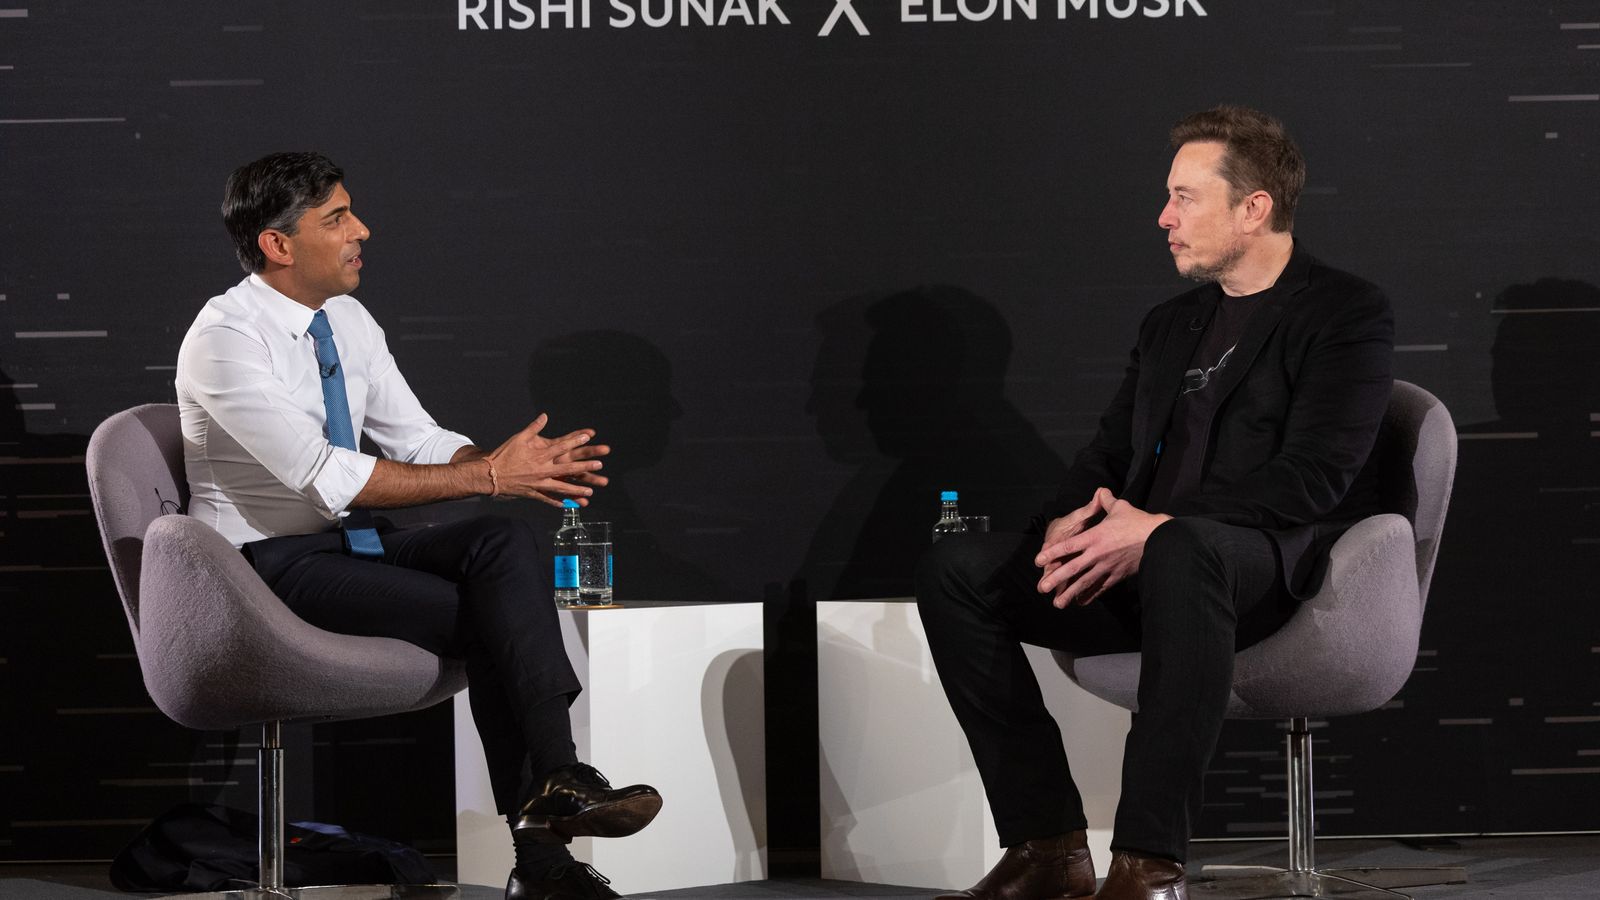 Rishi Sunak wanted to impress Elon Musk as he giggled along during softball Q&A